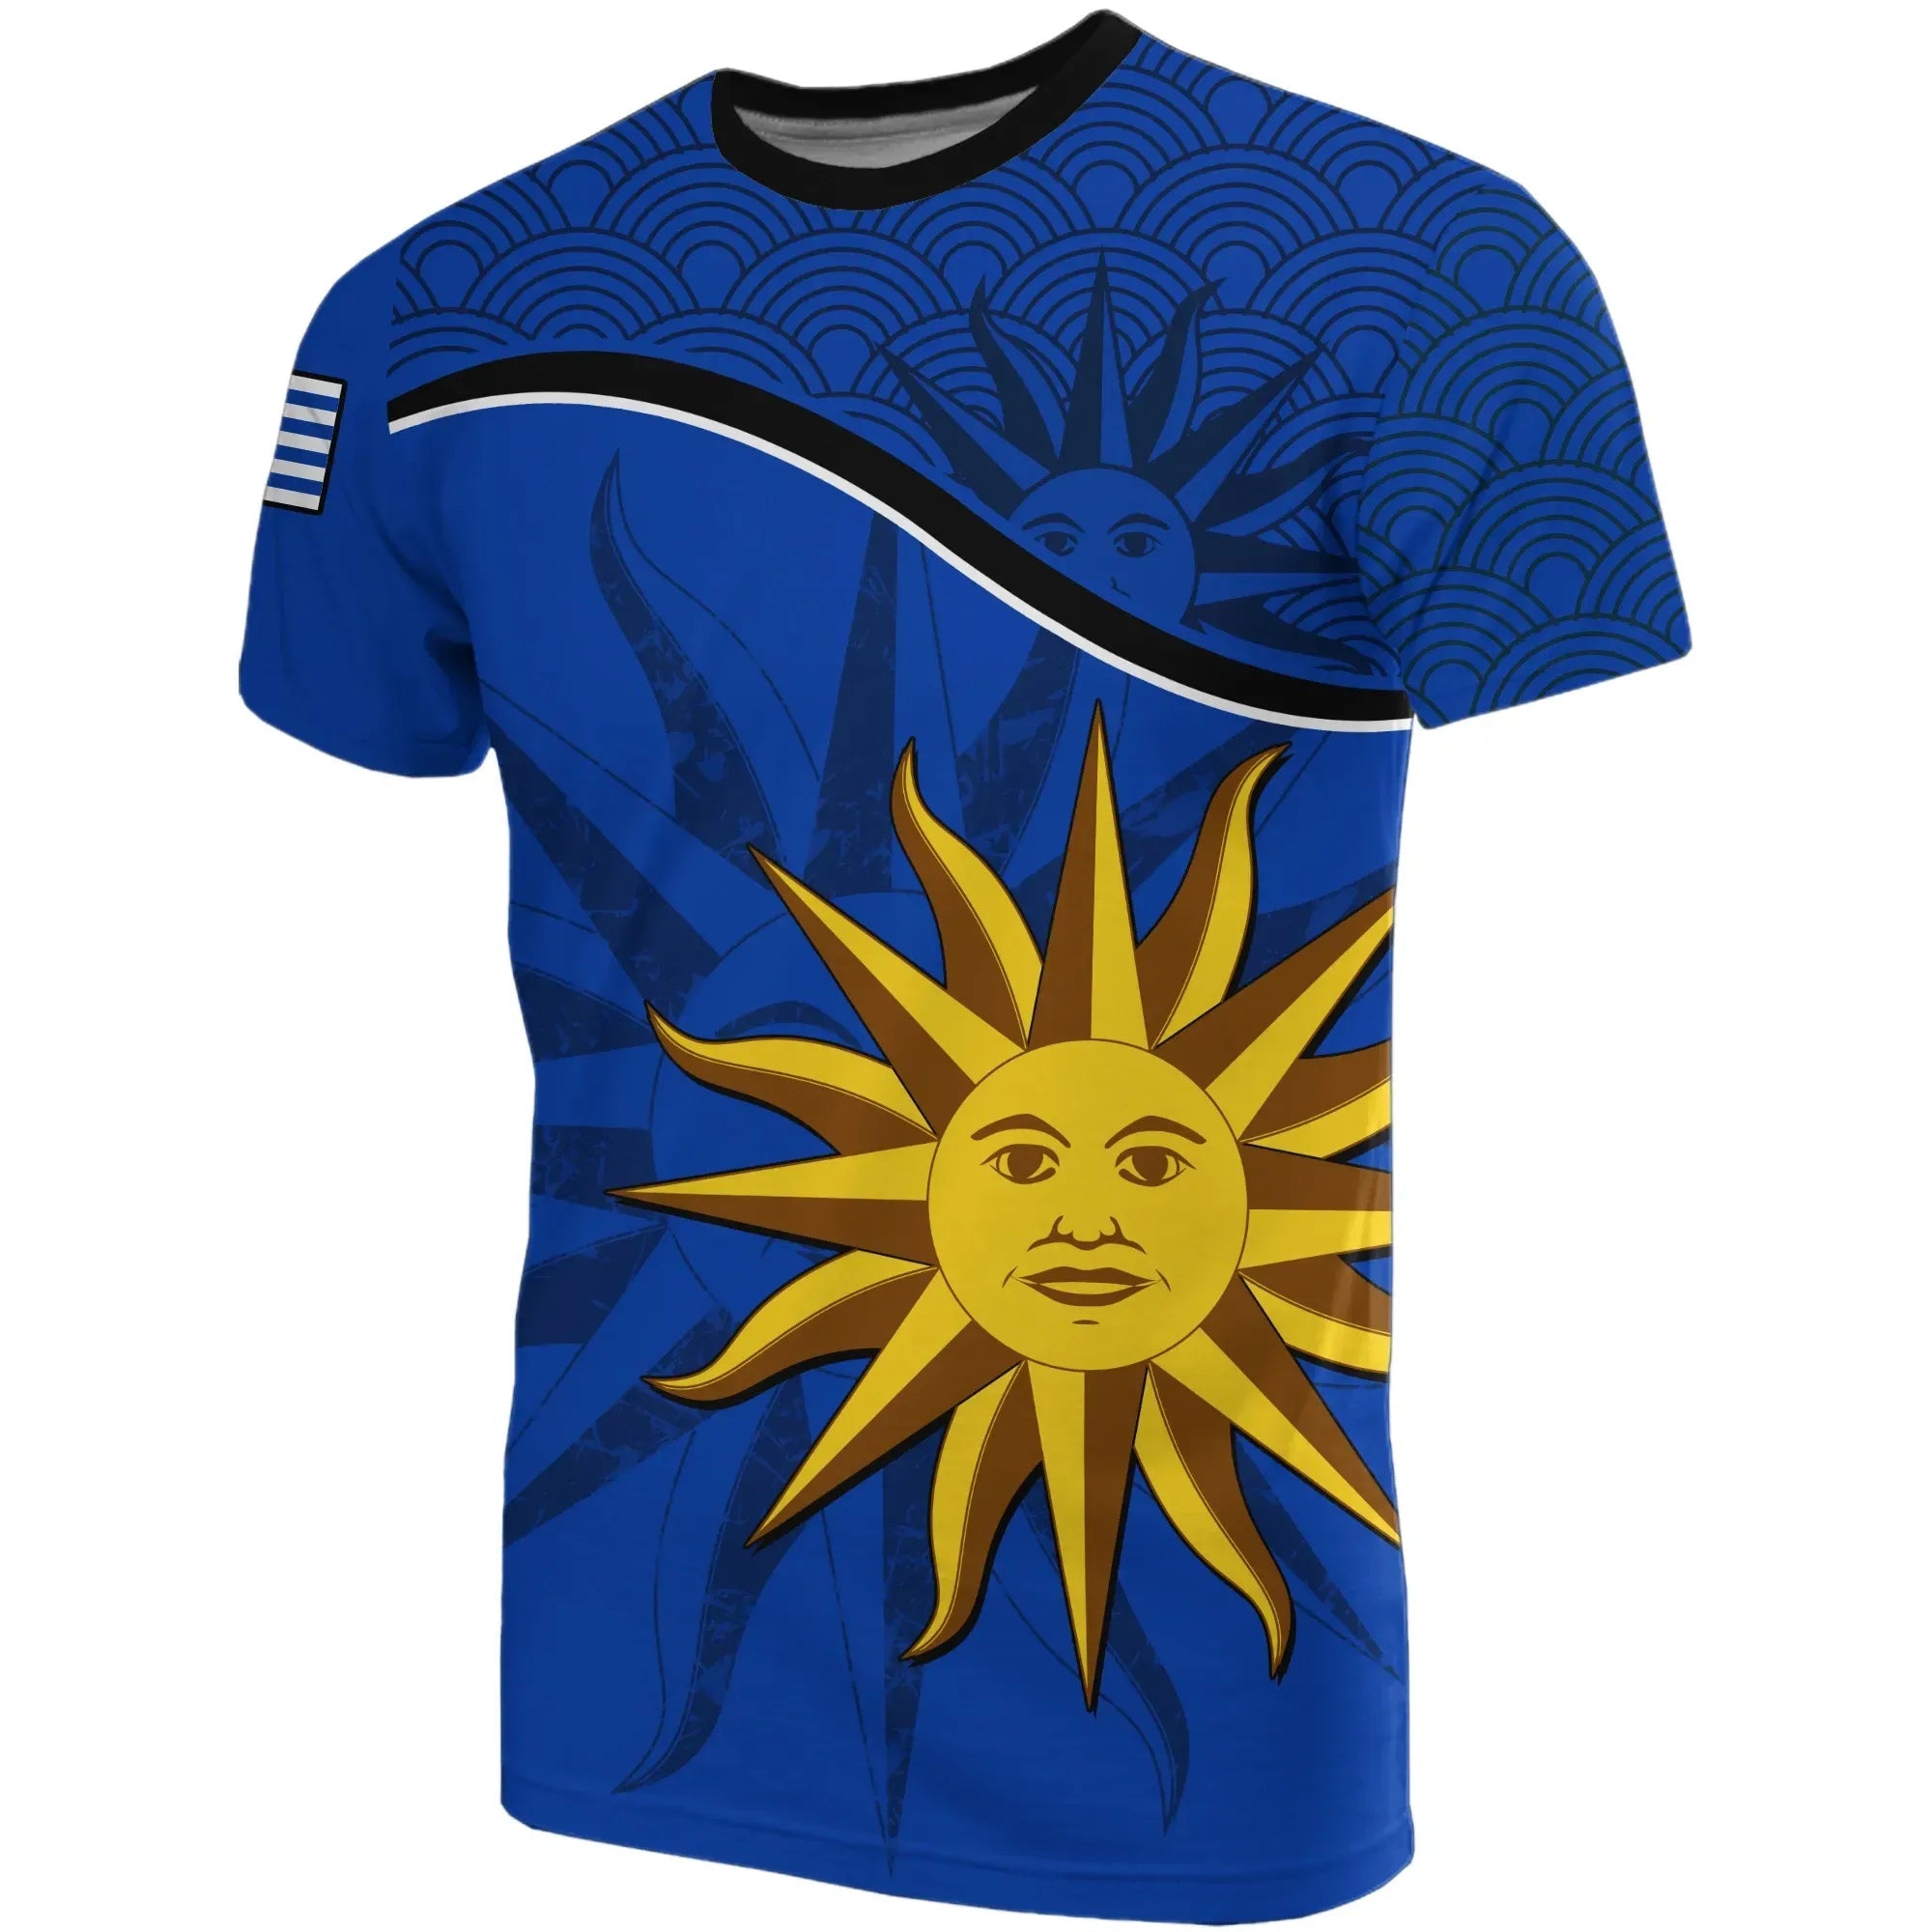 uruguay-flag-t-shirts